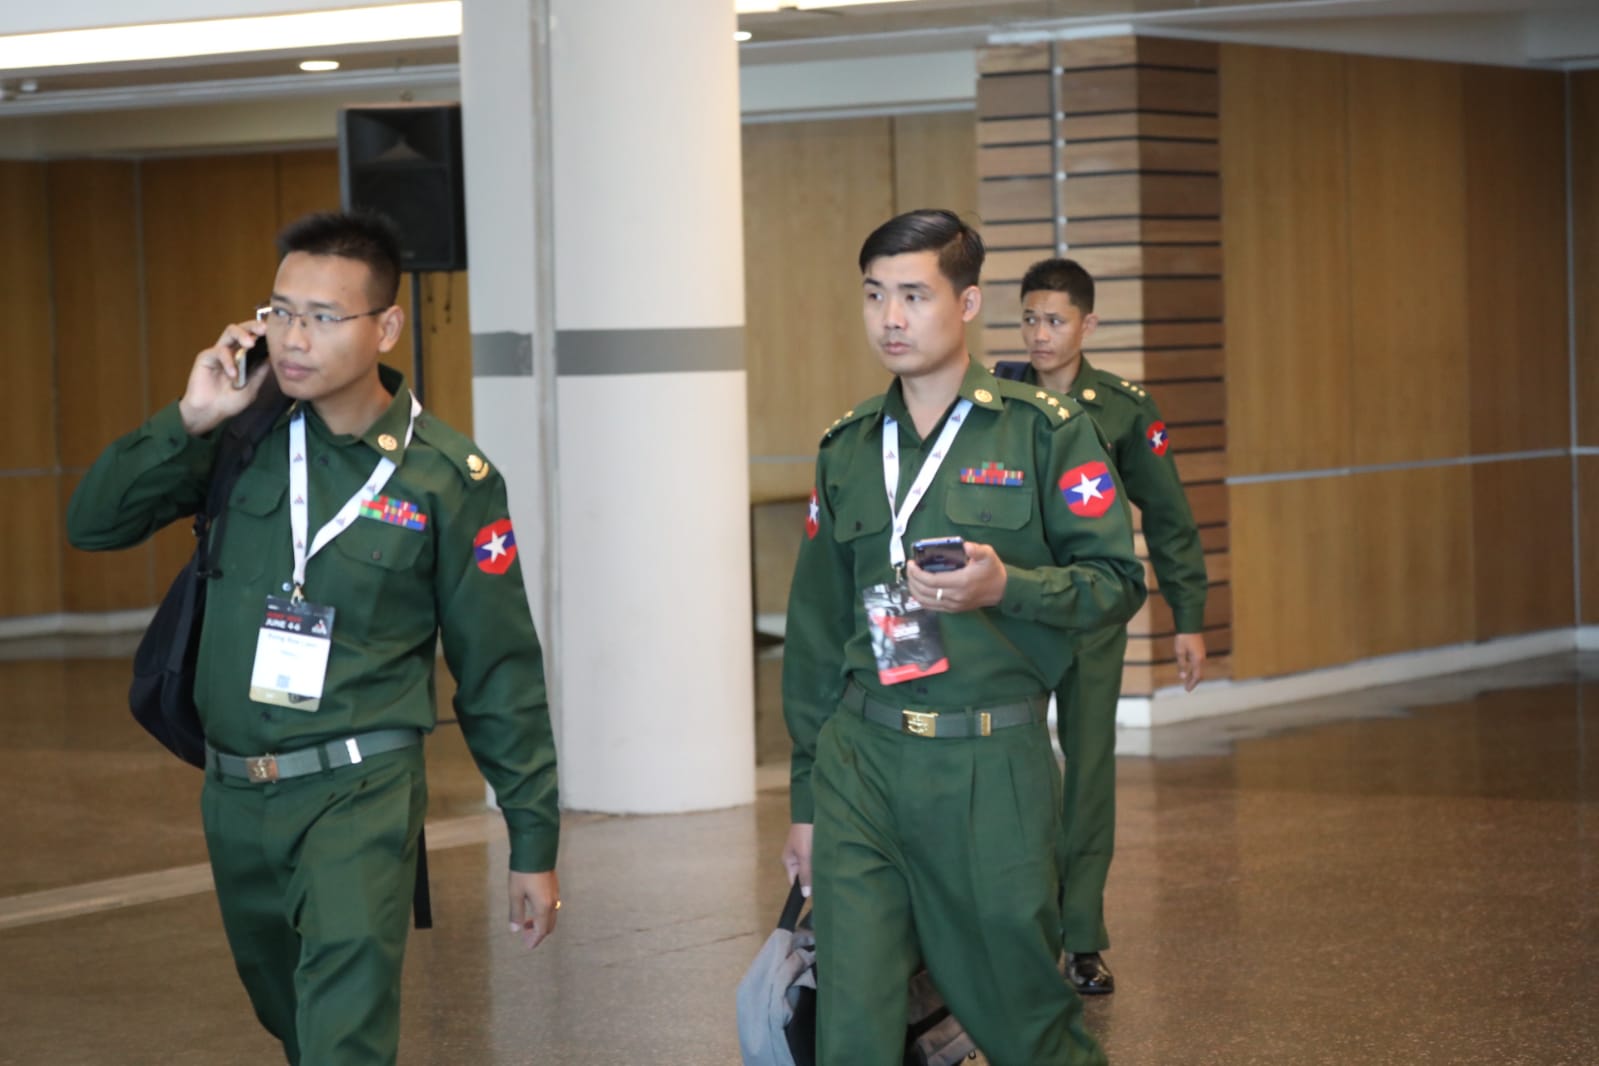 Myanmar military representatives at the ISDEF 2019 expo in Tel Aviv on June 4, 2019.